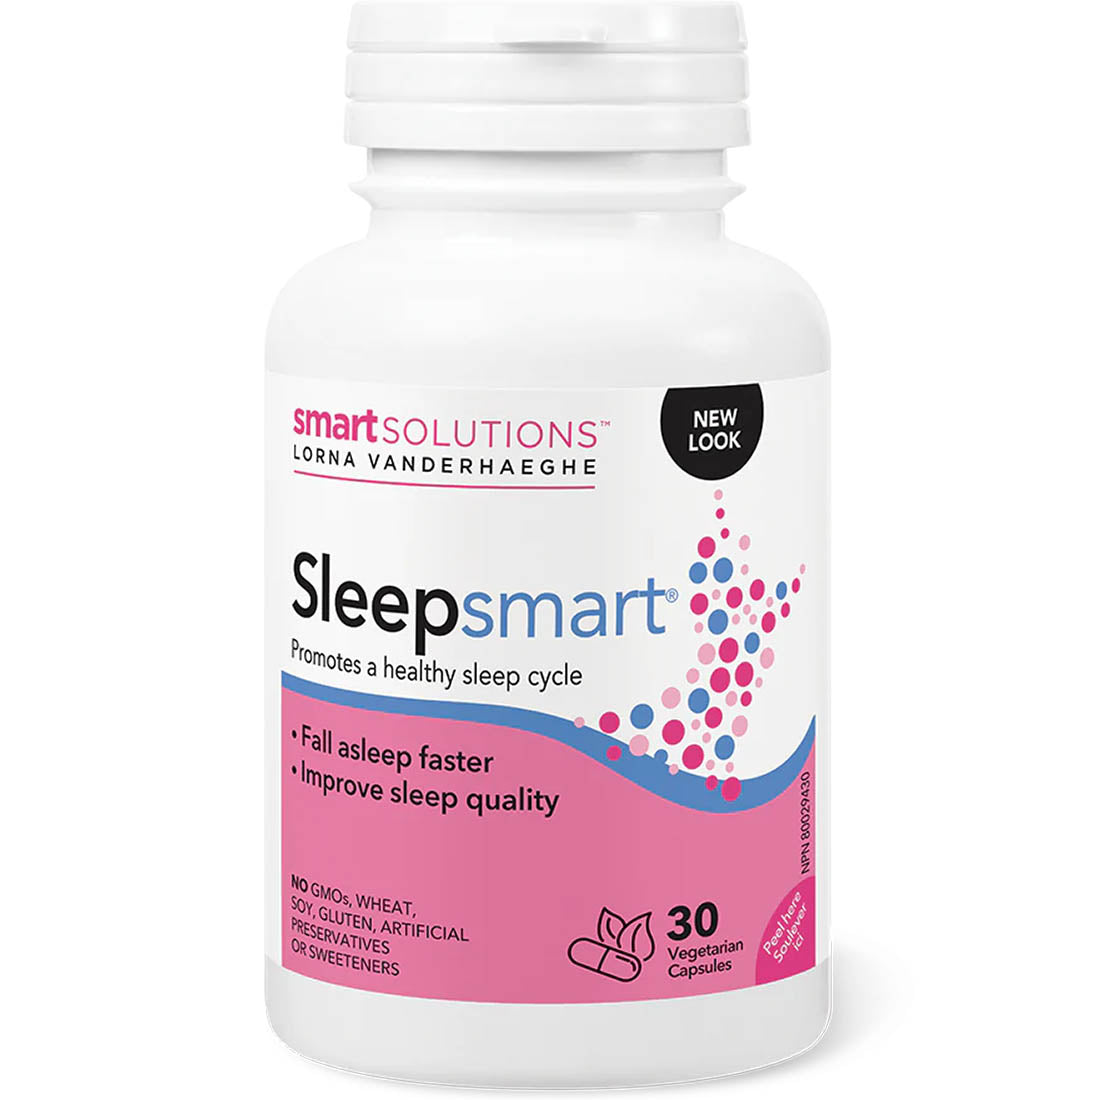 Smart Solutions Sleepsmart, Fall asleep faster and improve sleep quality, 30 Vegetarian Capsules (Formerly Lorna Vanderhaeghe Sleepsmart)